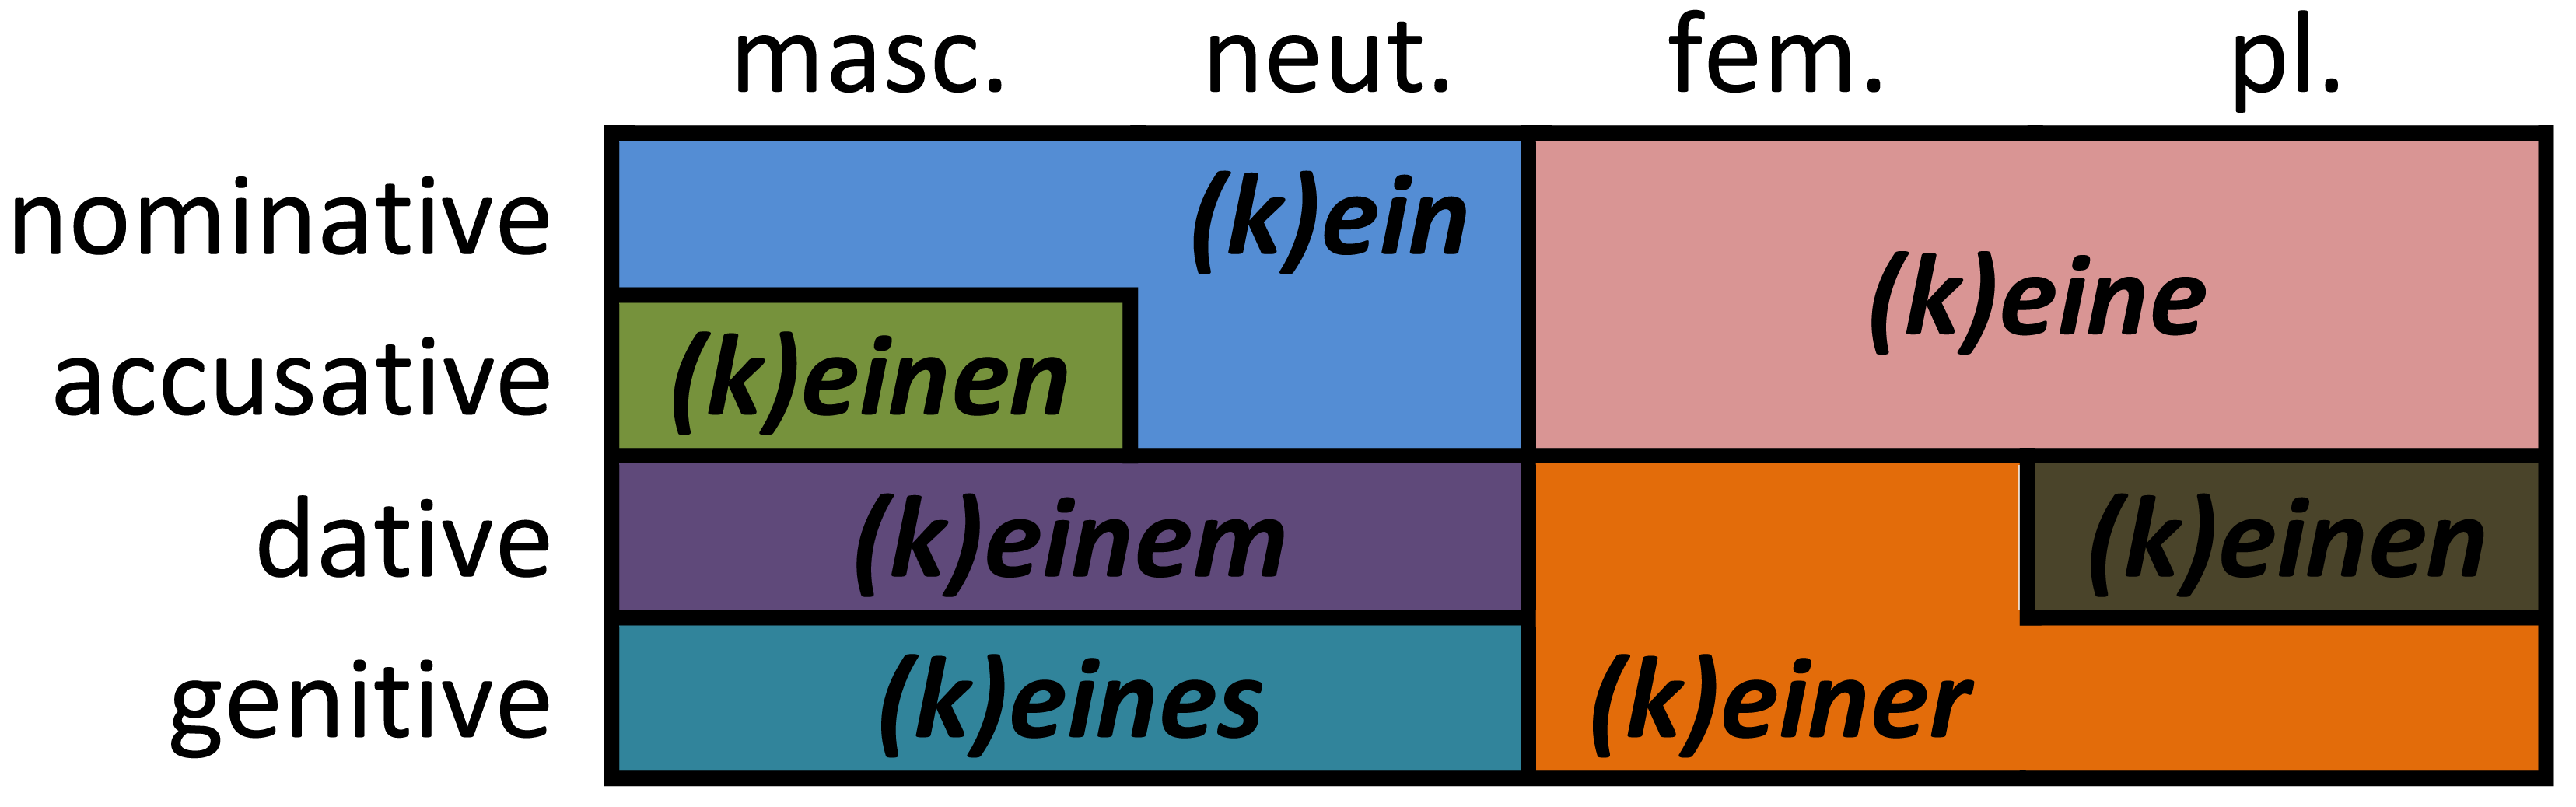 File:German indefinite article declension.png - Wikipedia